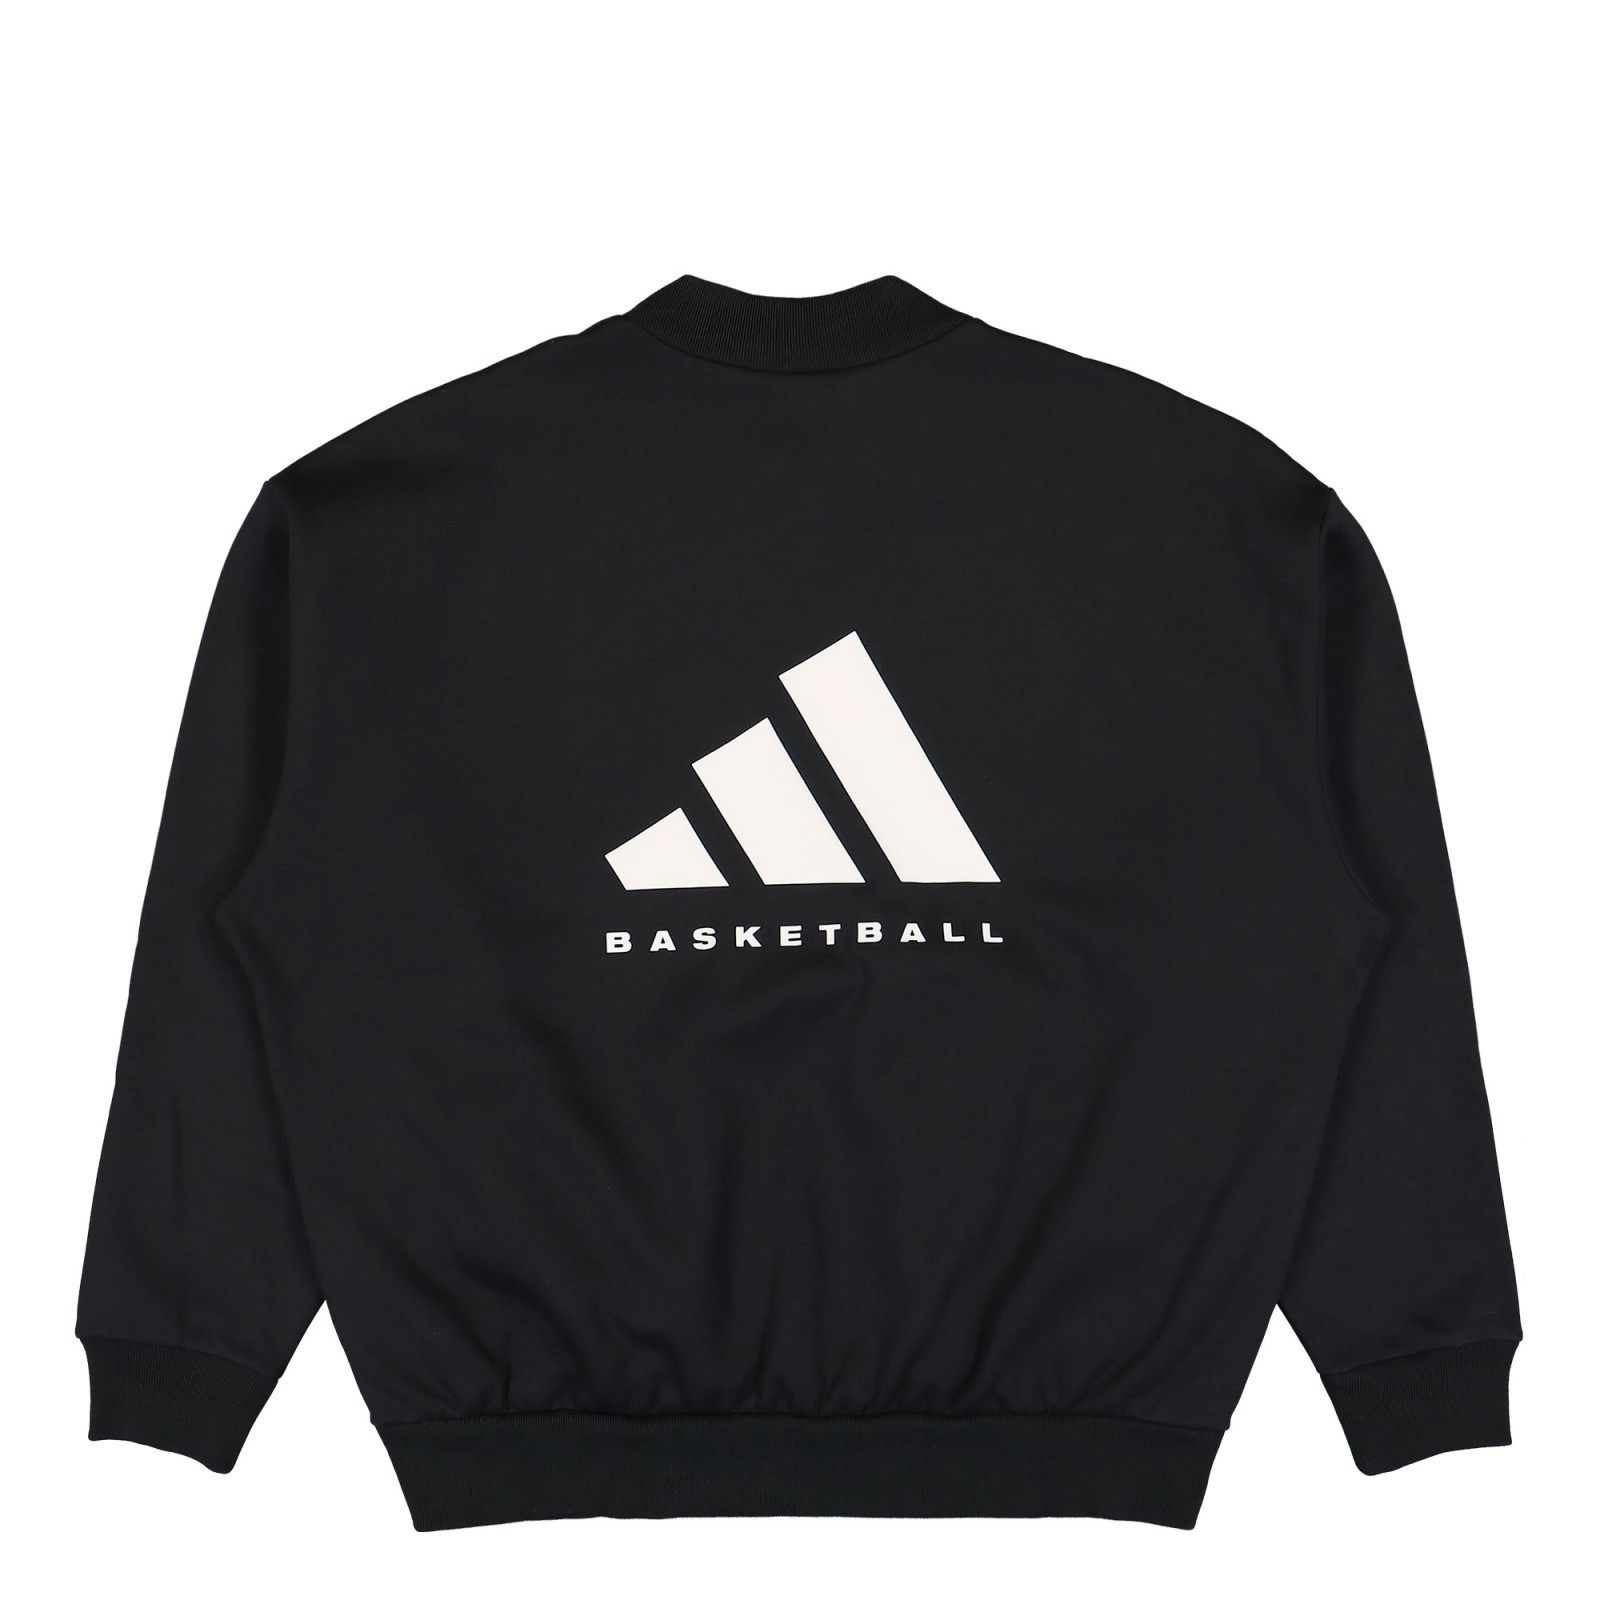 Adidas One Basketball
Fleece Crew Black